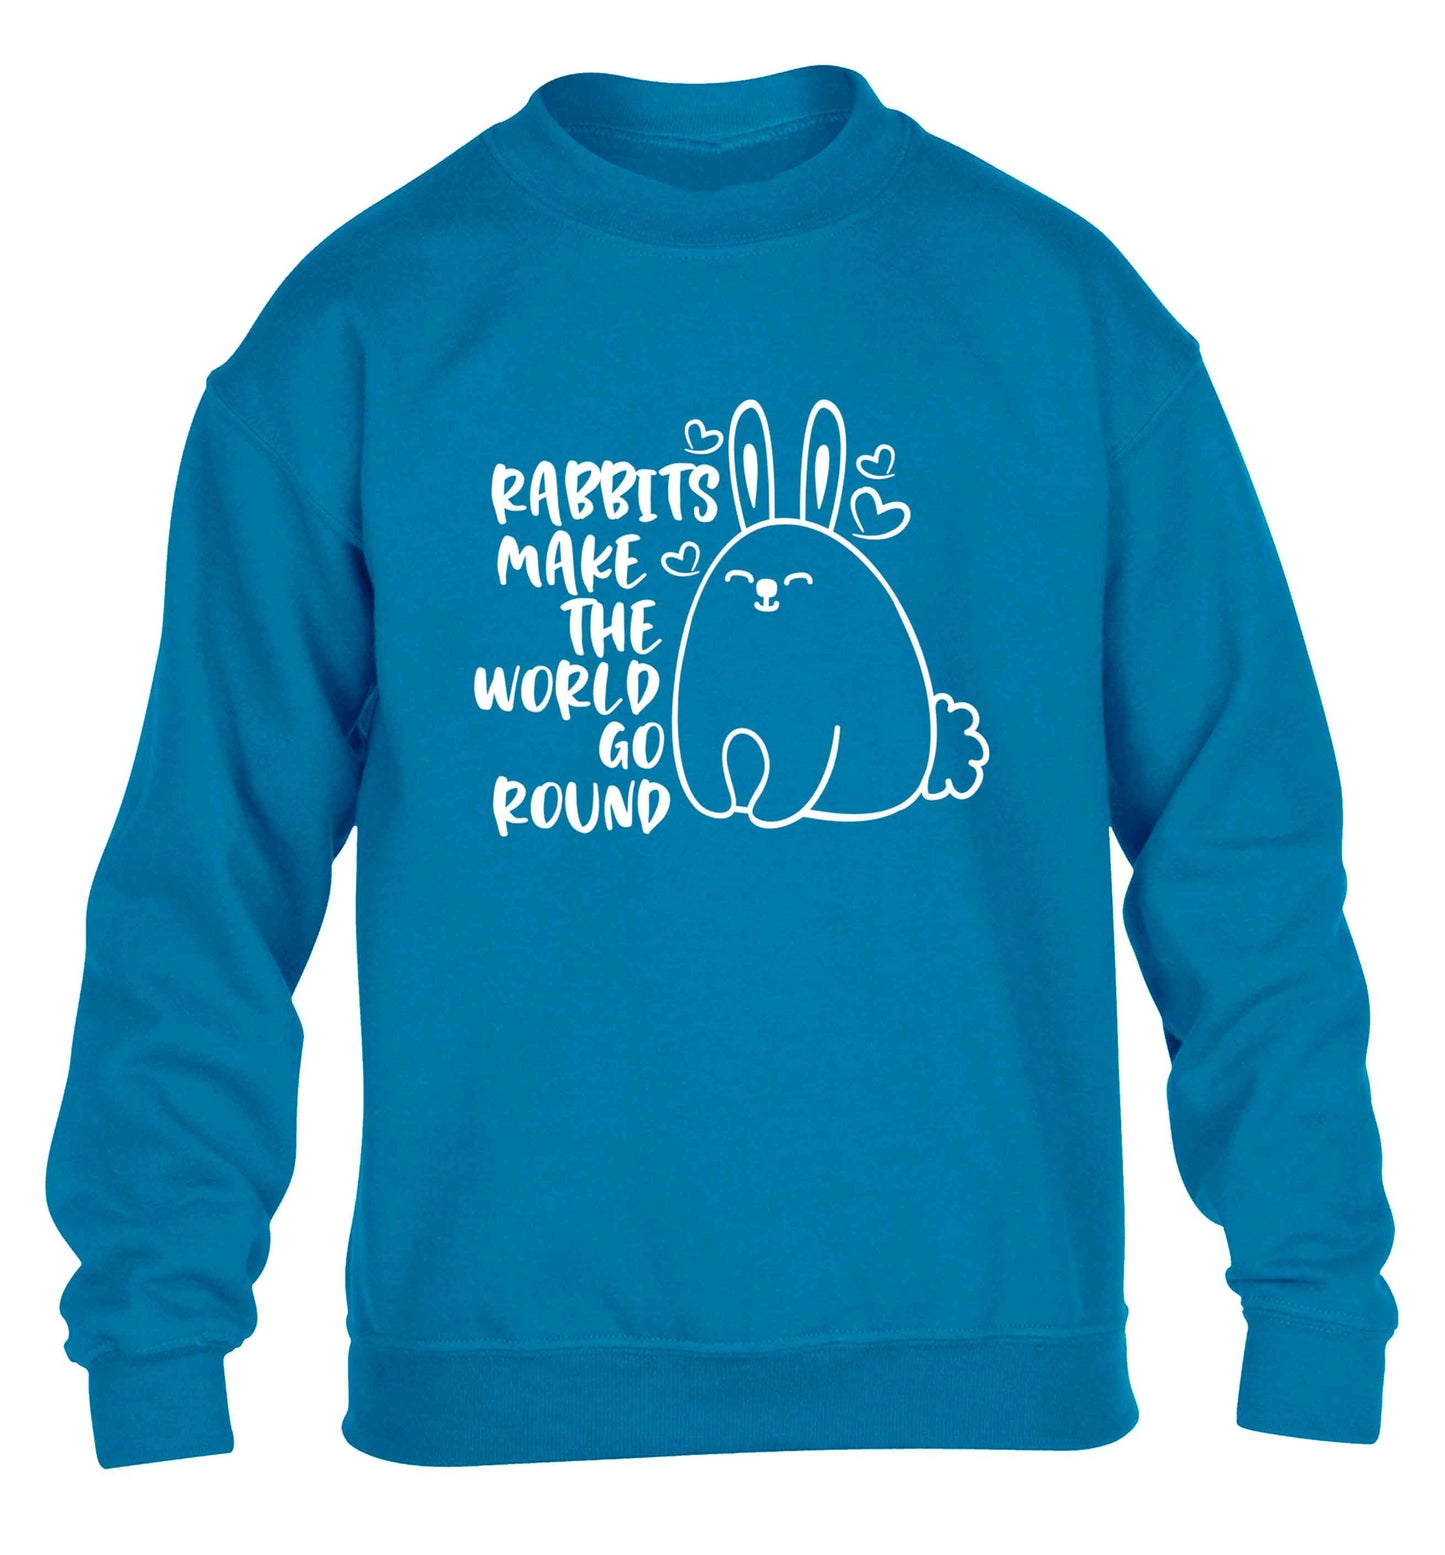 Rabbits make the world go round children's blue sweater 12-13 Years